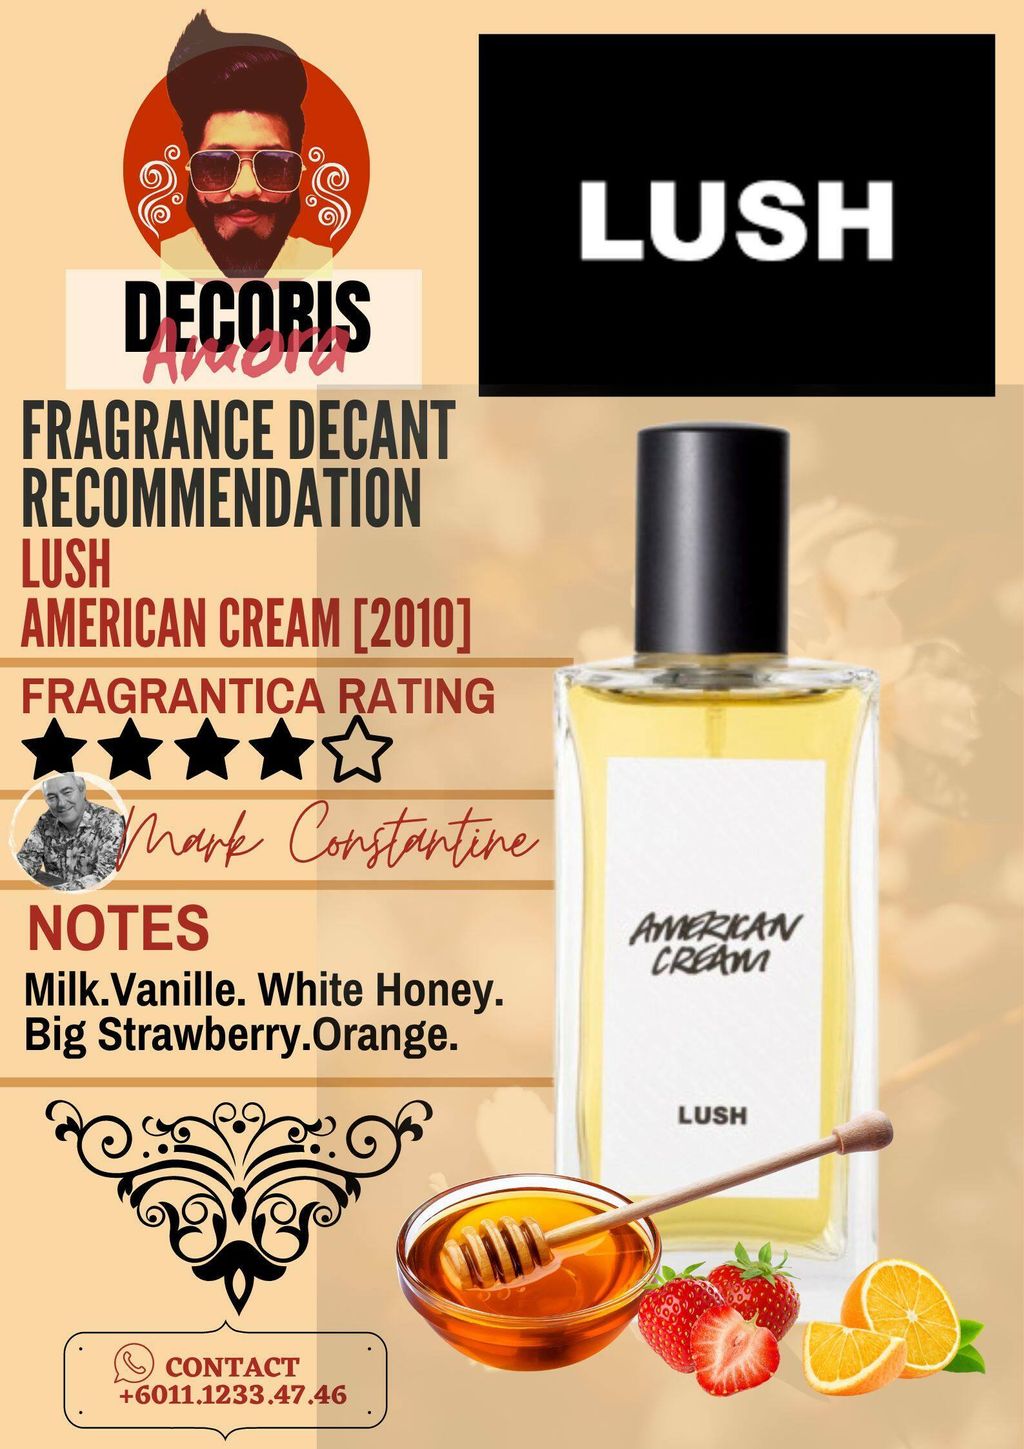 Lush American Cream- Perfume Decant – Decoris Amora Perfume Decant